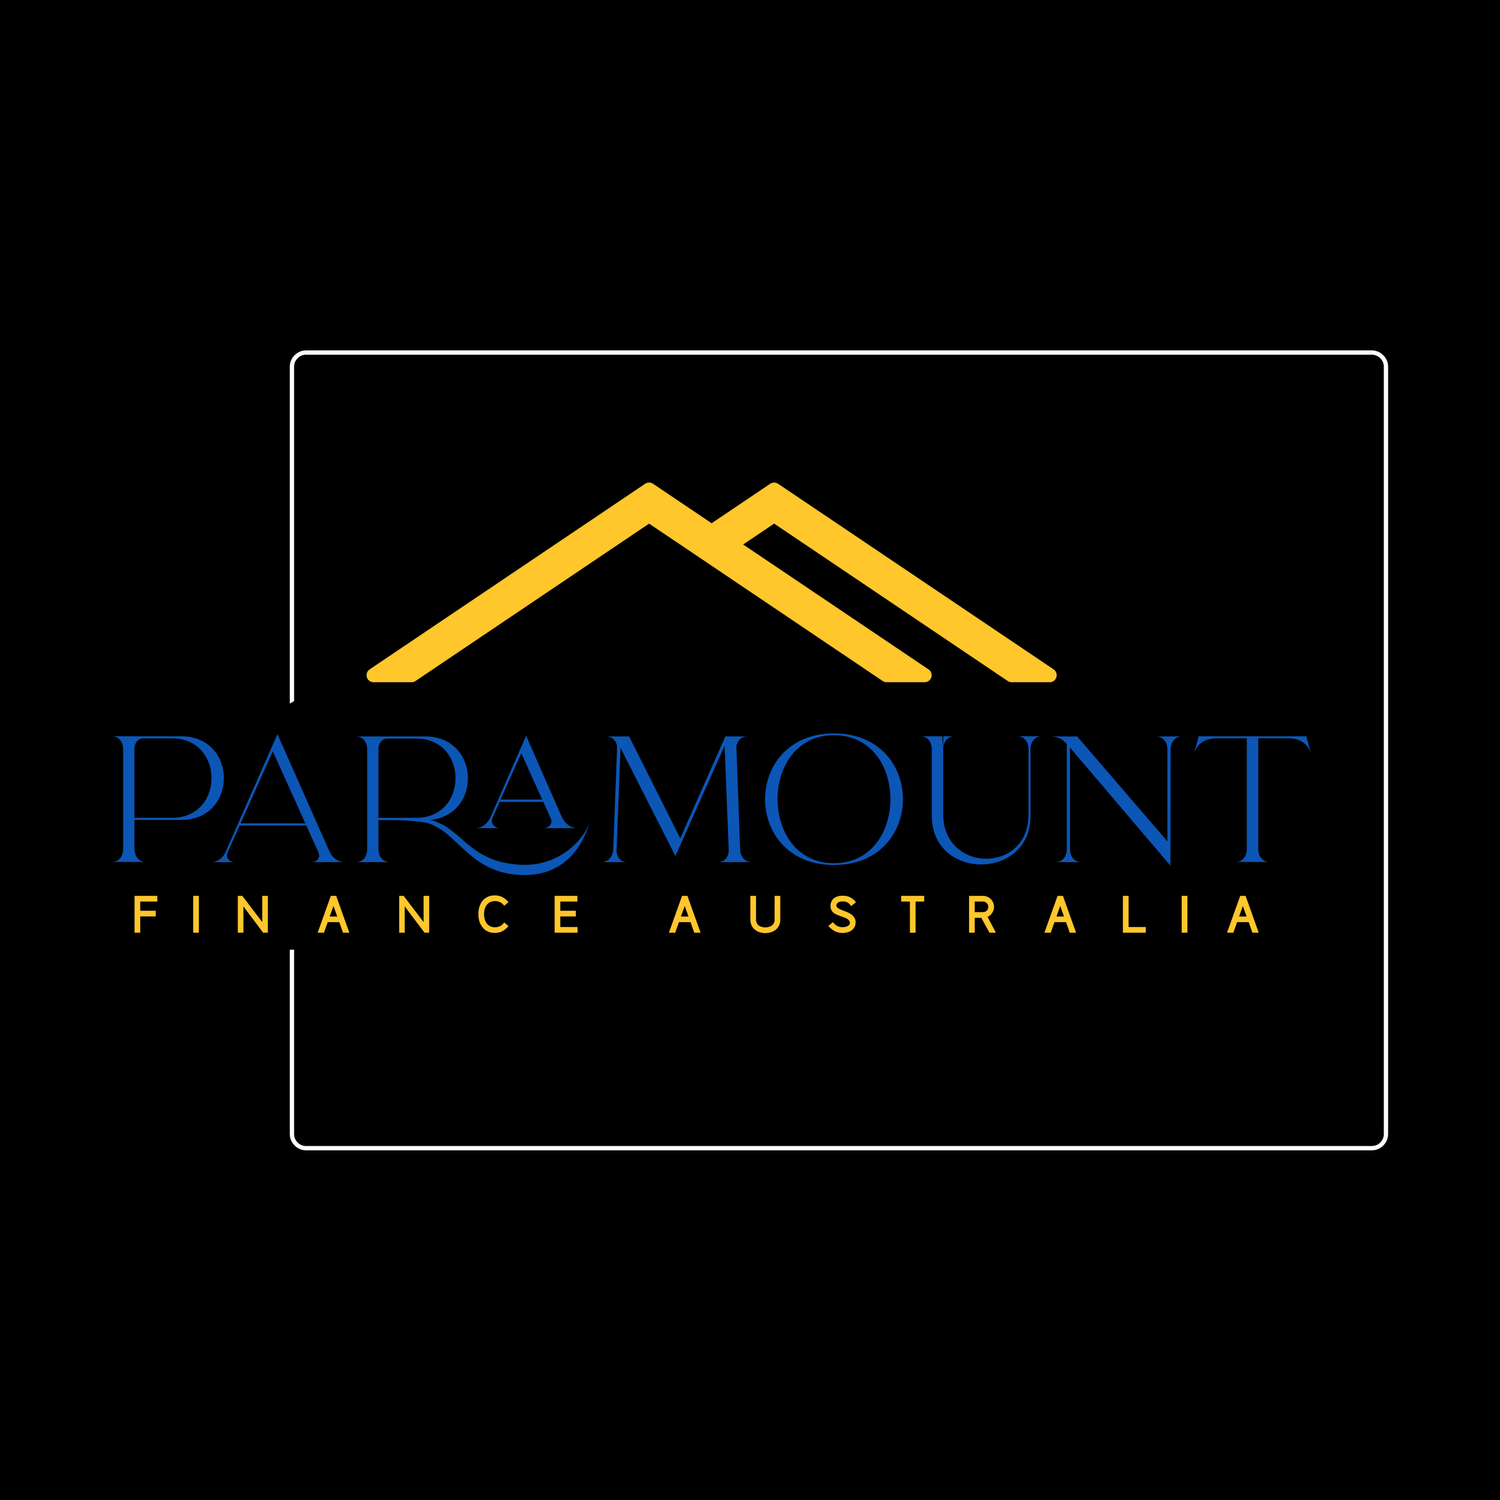 Paramount Finance Australia Pty Ltd